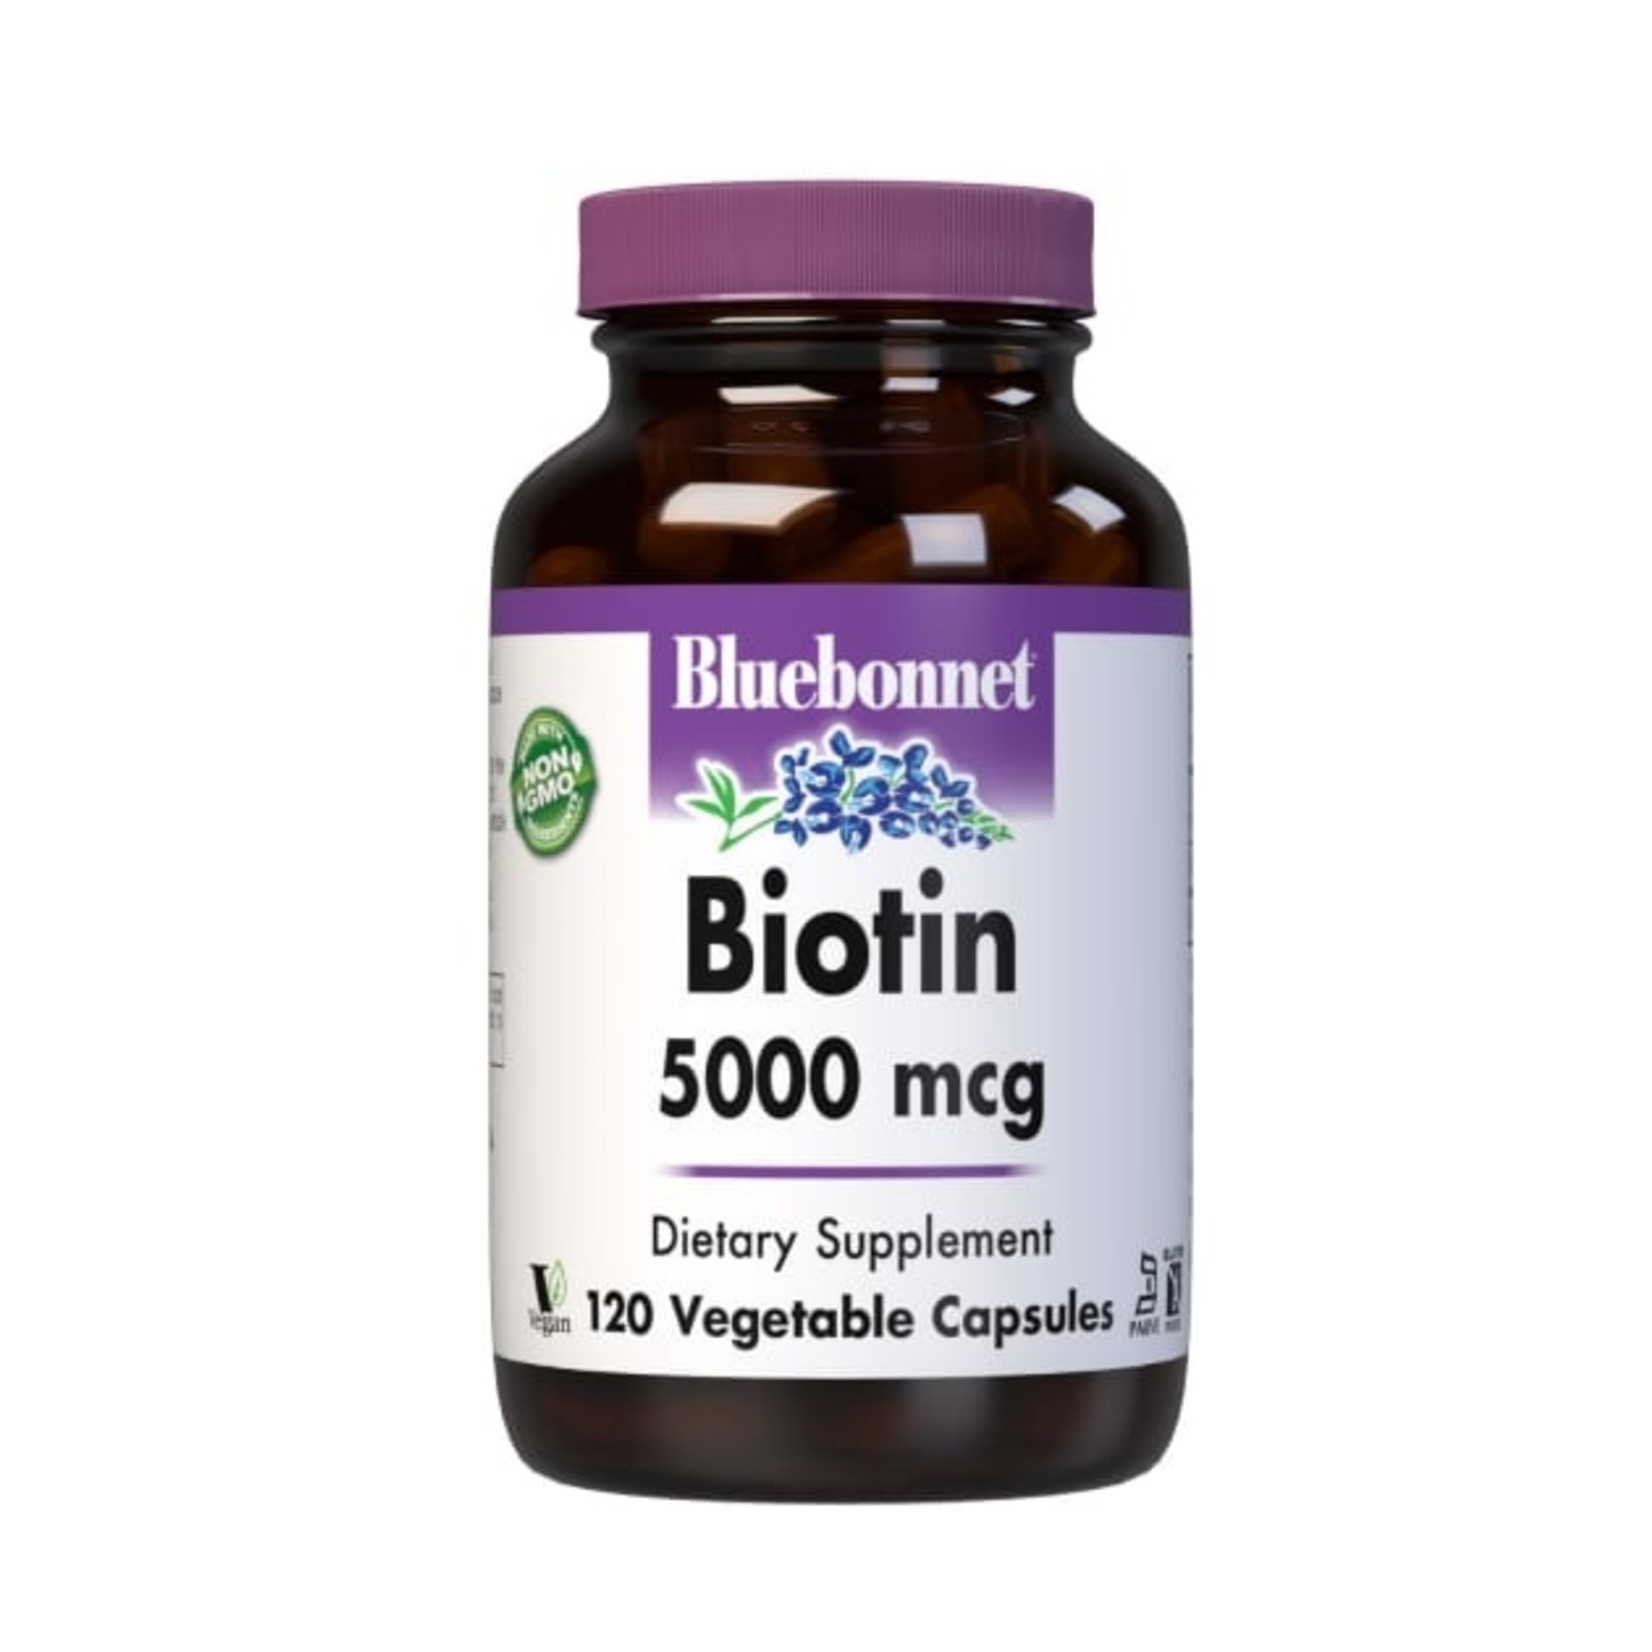 Bluebonnet Bluebonnet - Biotin 5000 mcg - 120 Veg Capsules